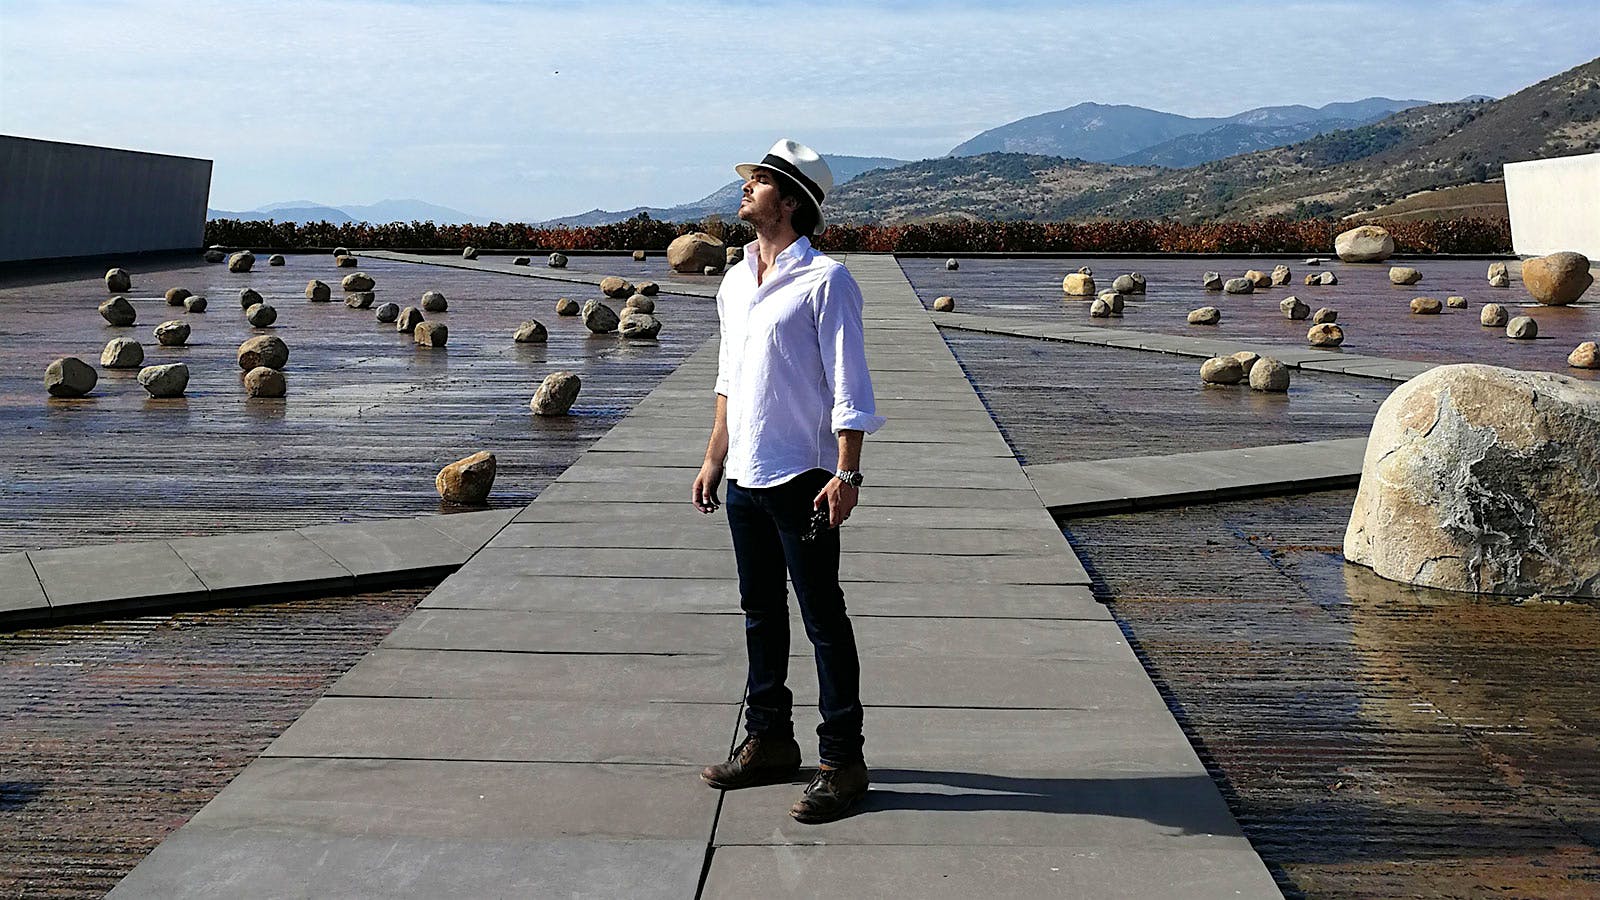 Ian Somerhalder in the vineyard at Vik